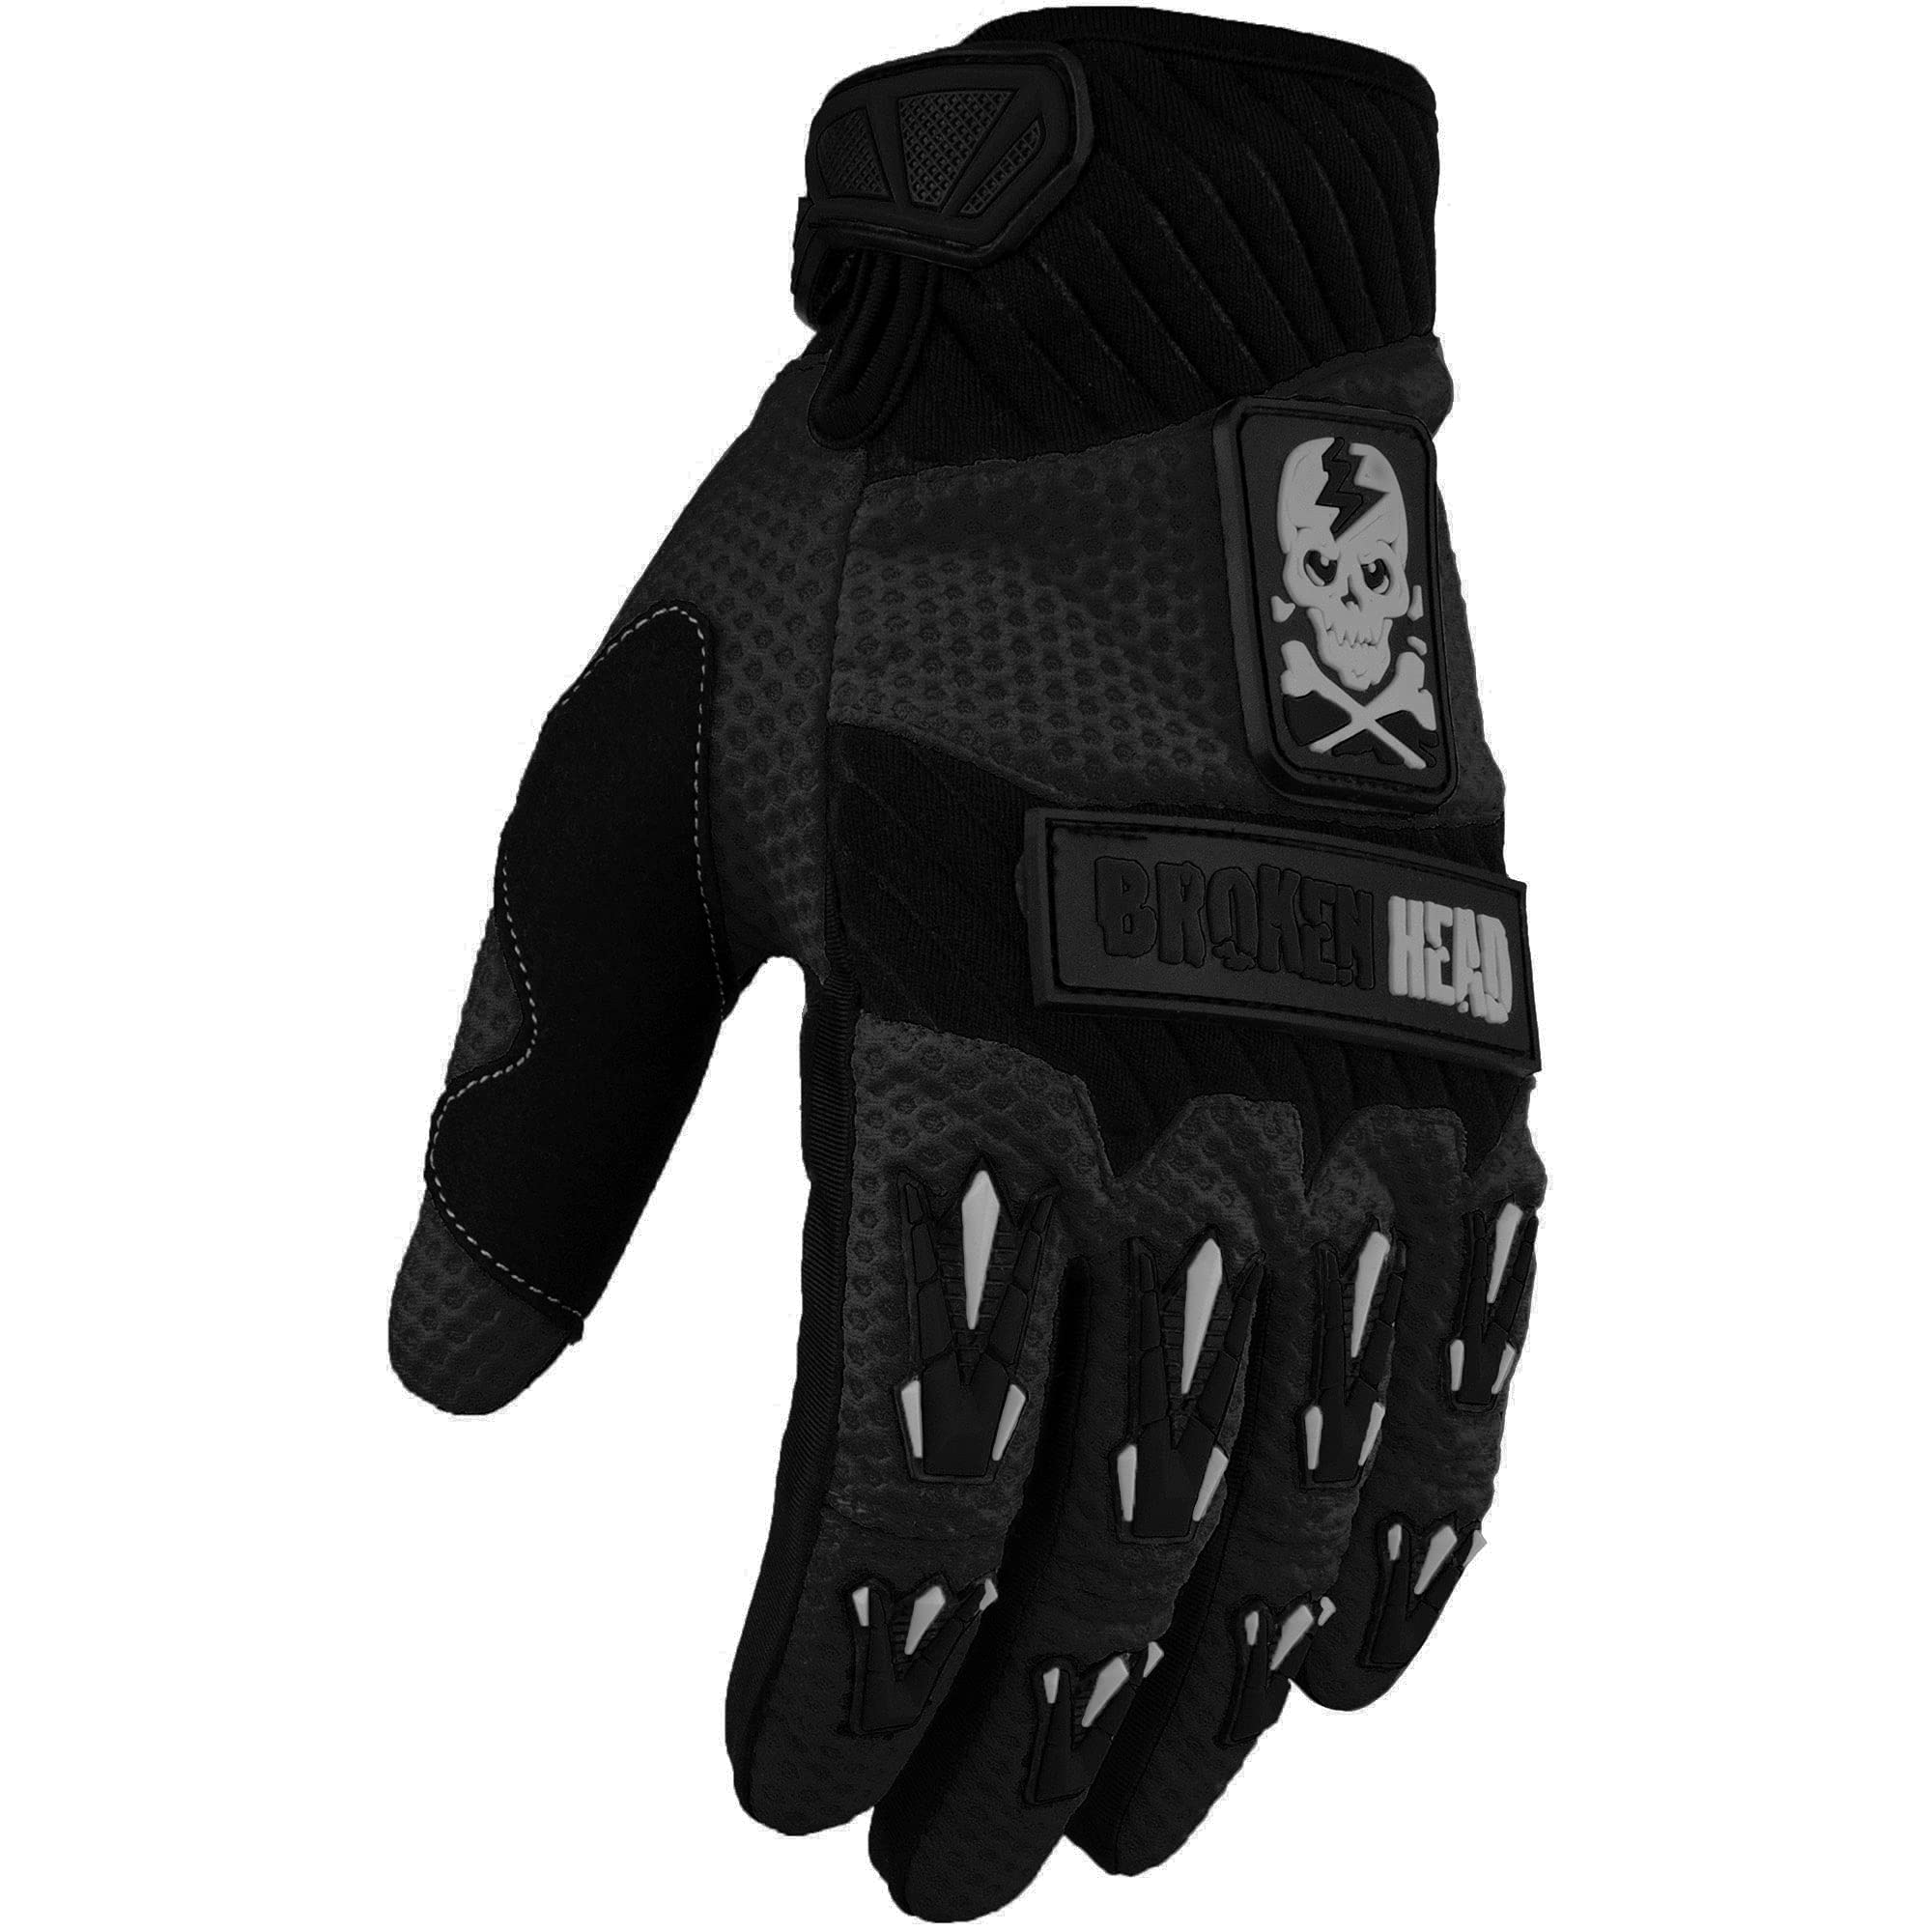 Broken Head MX-Handschuhe Faustschlag - Motorrad-Handschuhe Für Motocross, Enduro, Mountainbike - Schwarz (XXL)